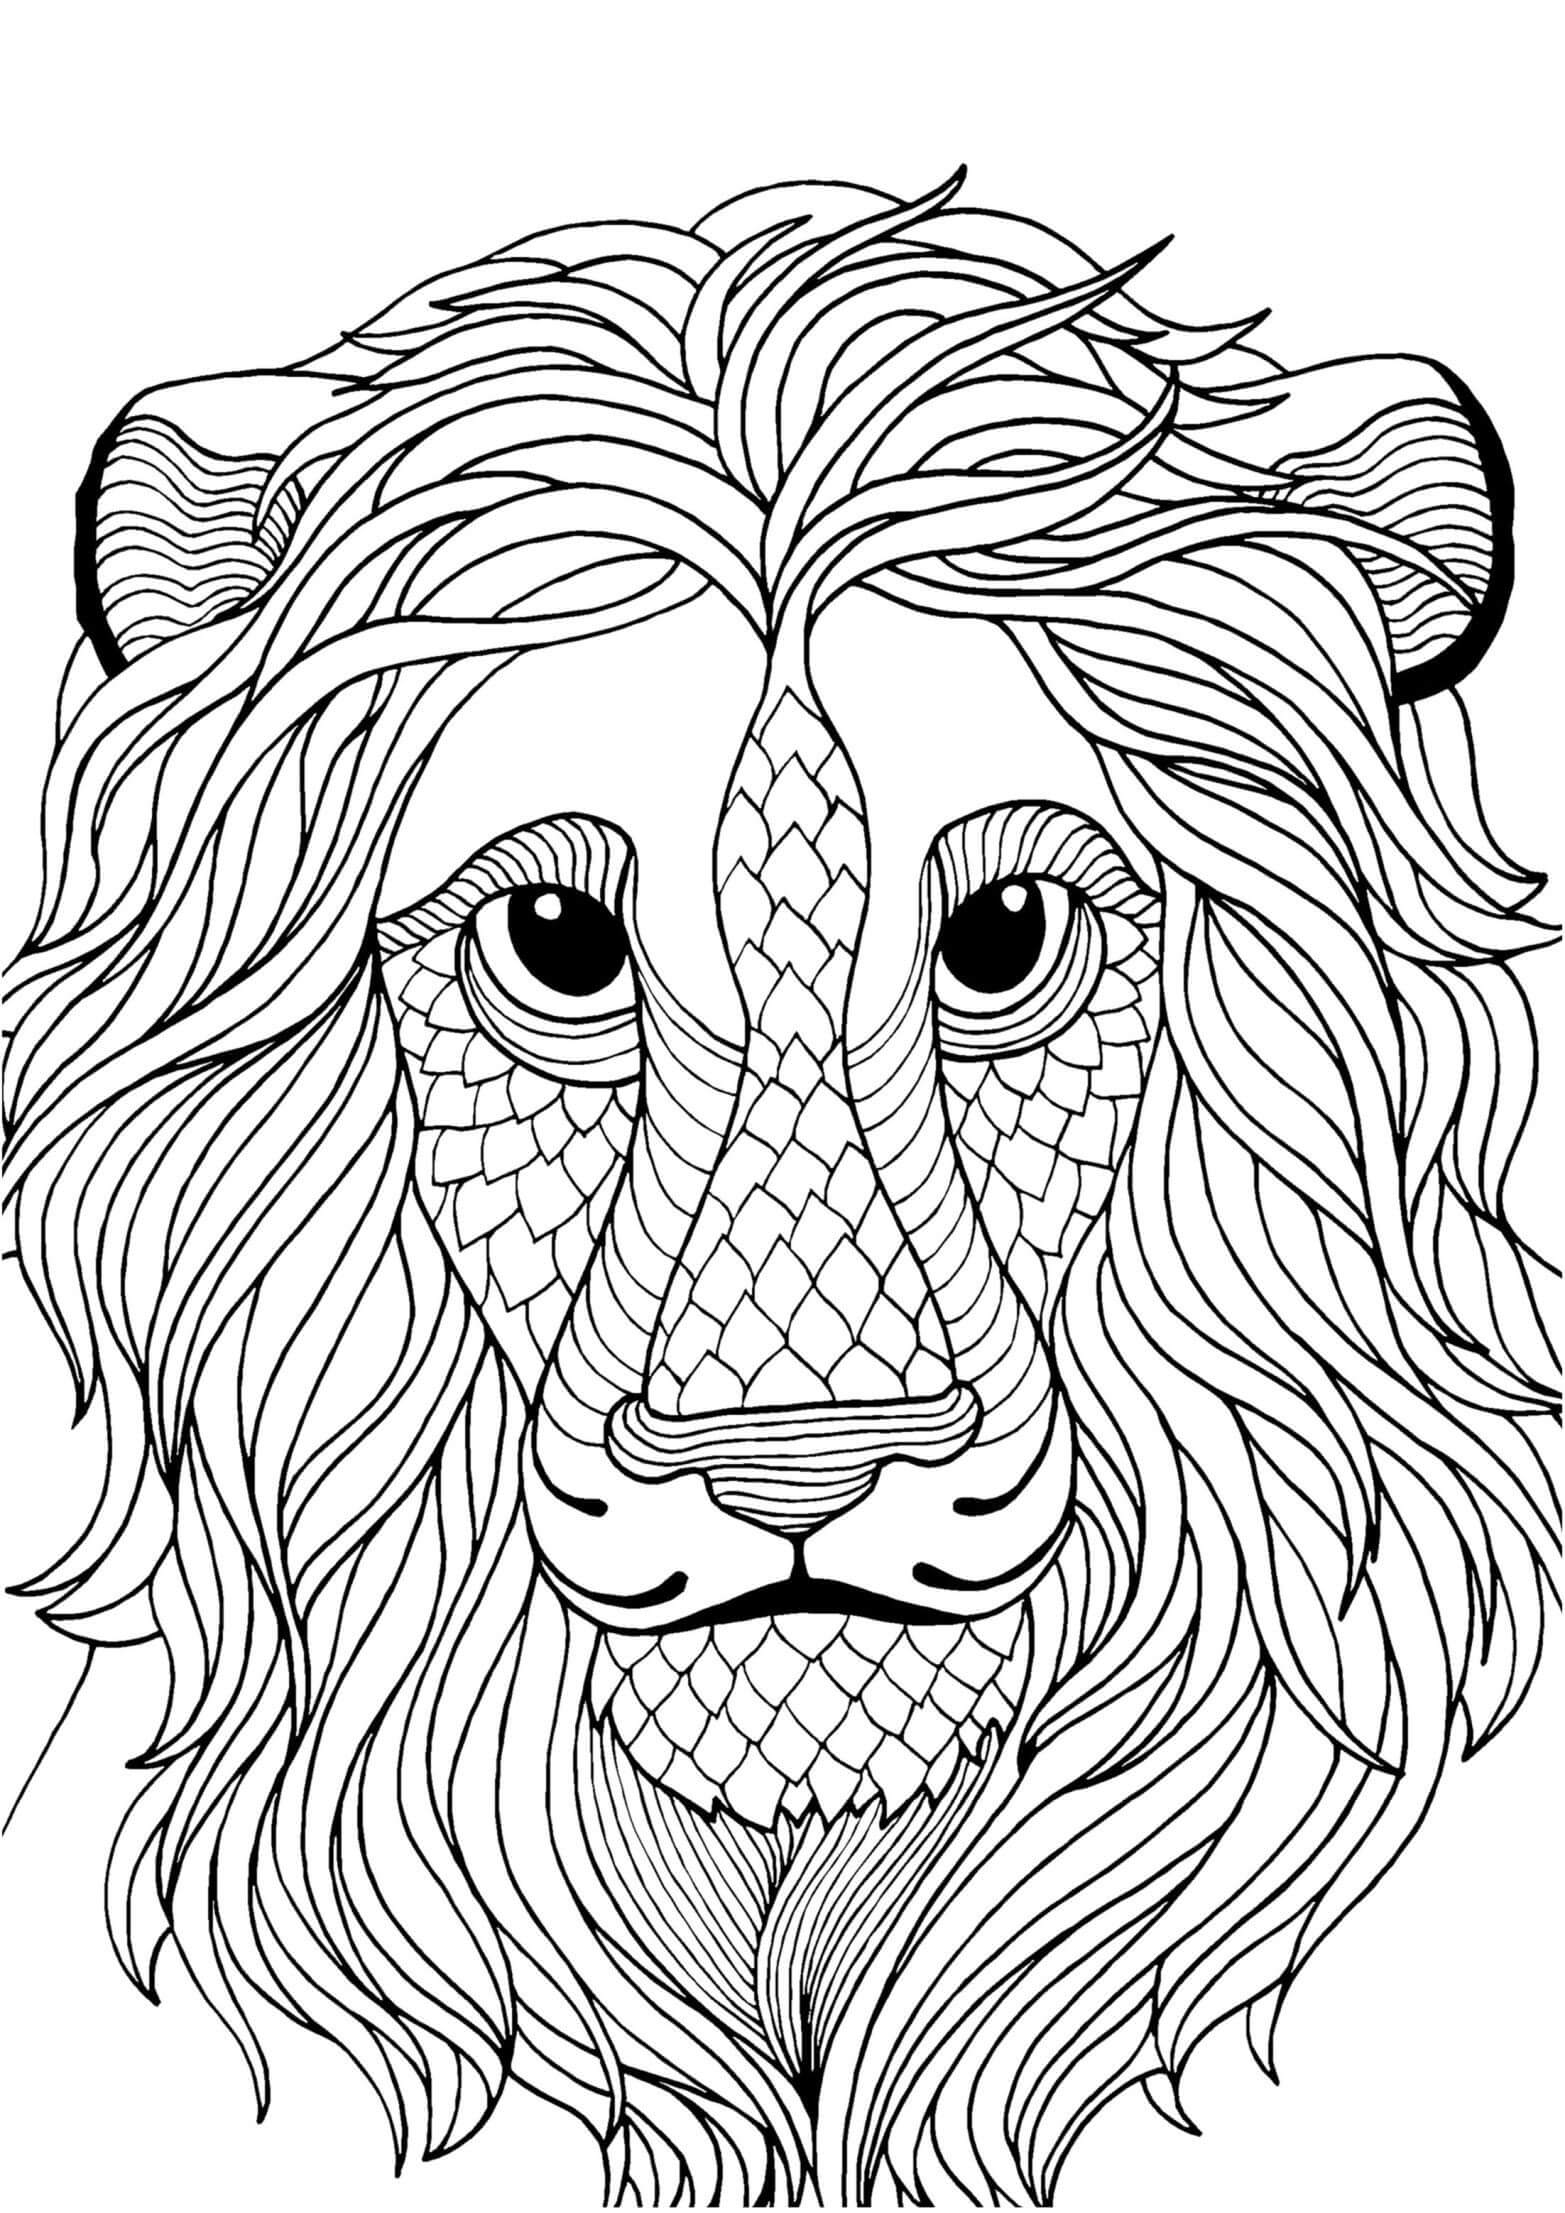 Mandala Lion Coloring Page – Sheet 10 Mandala